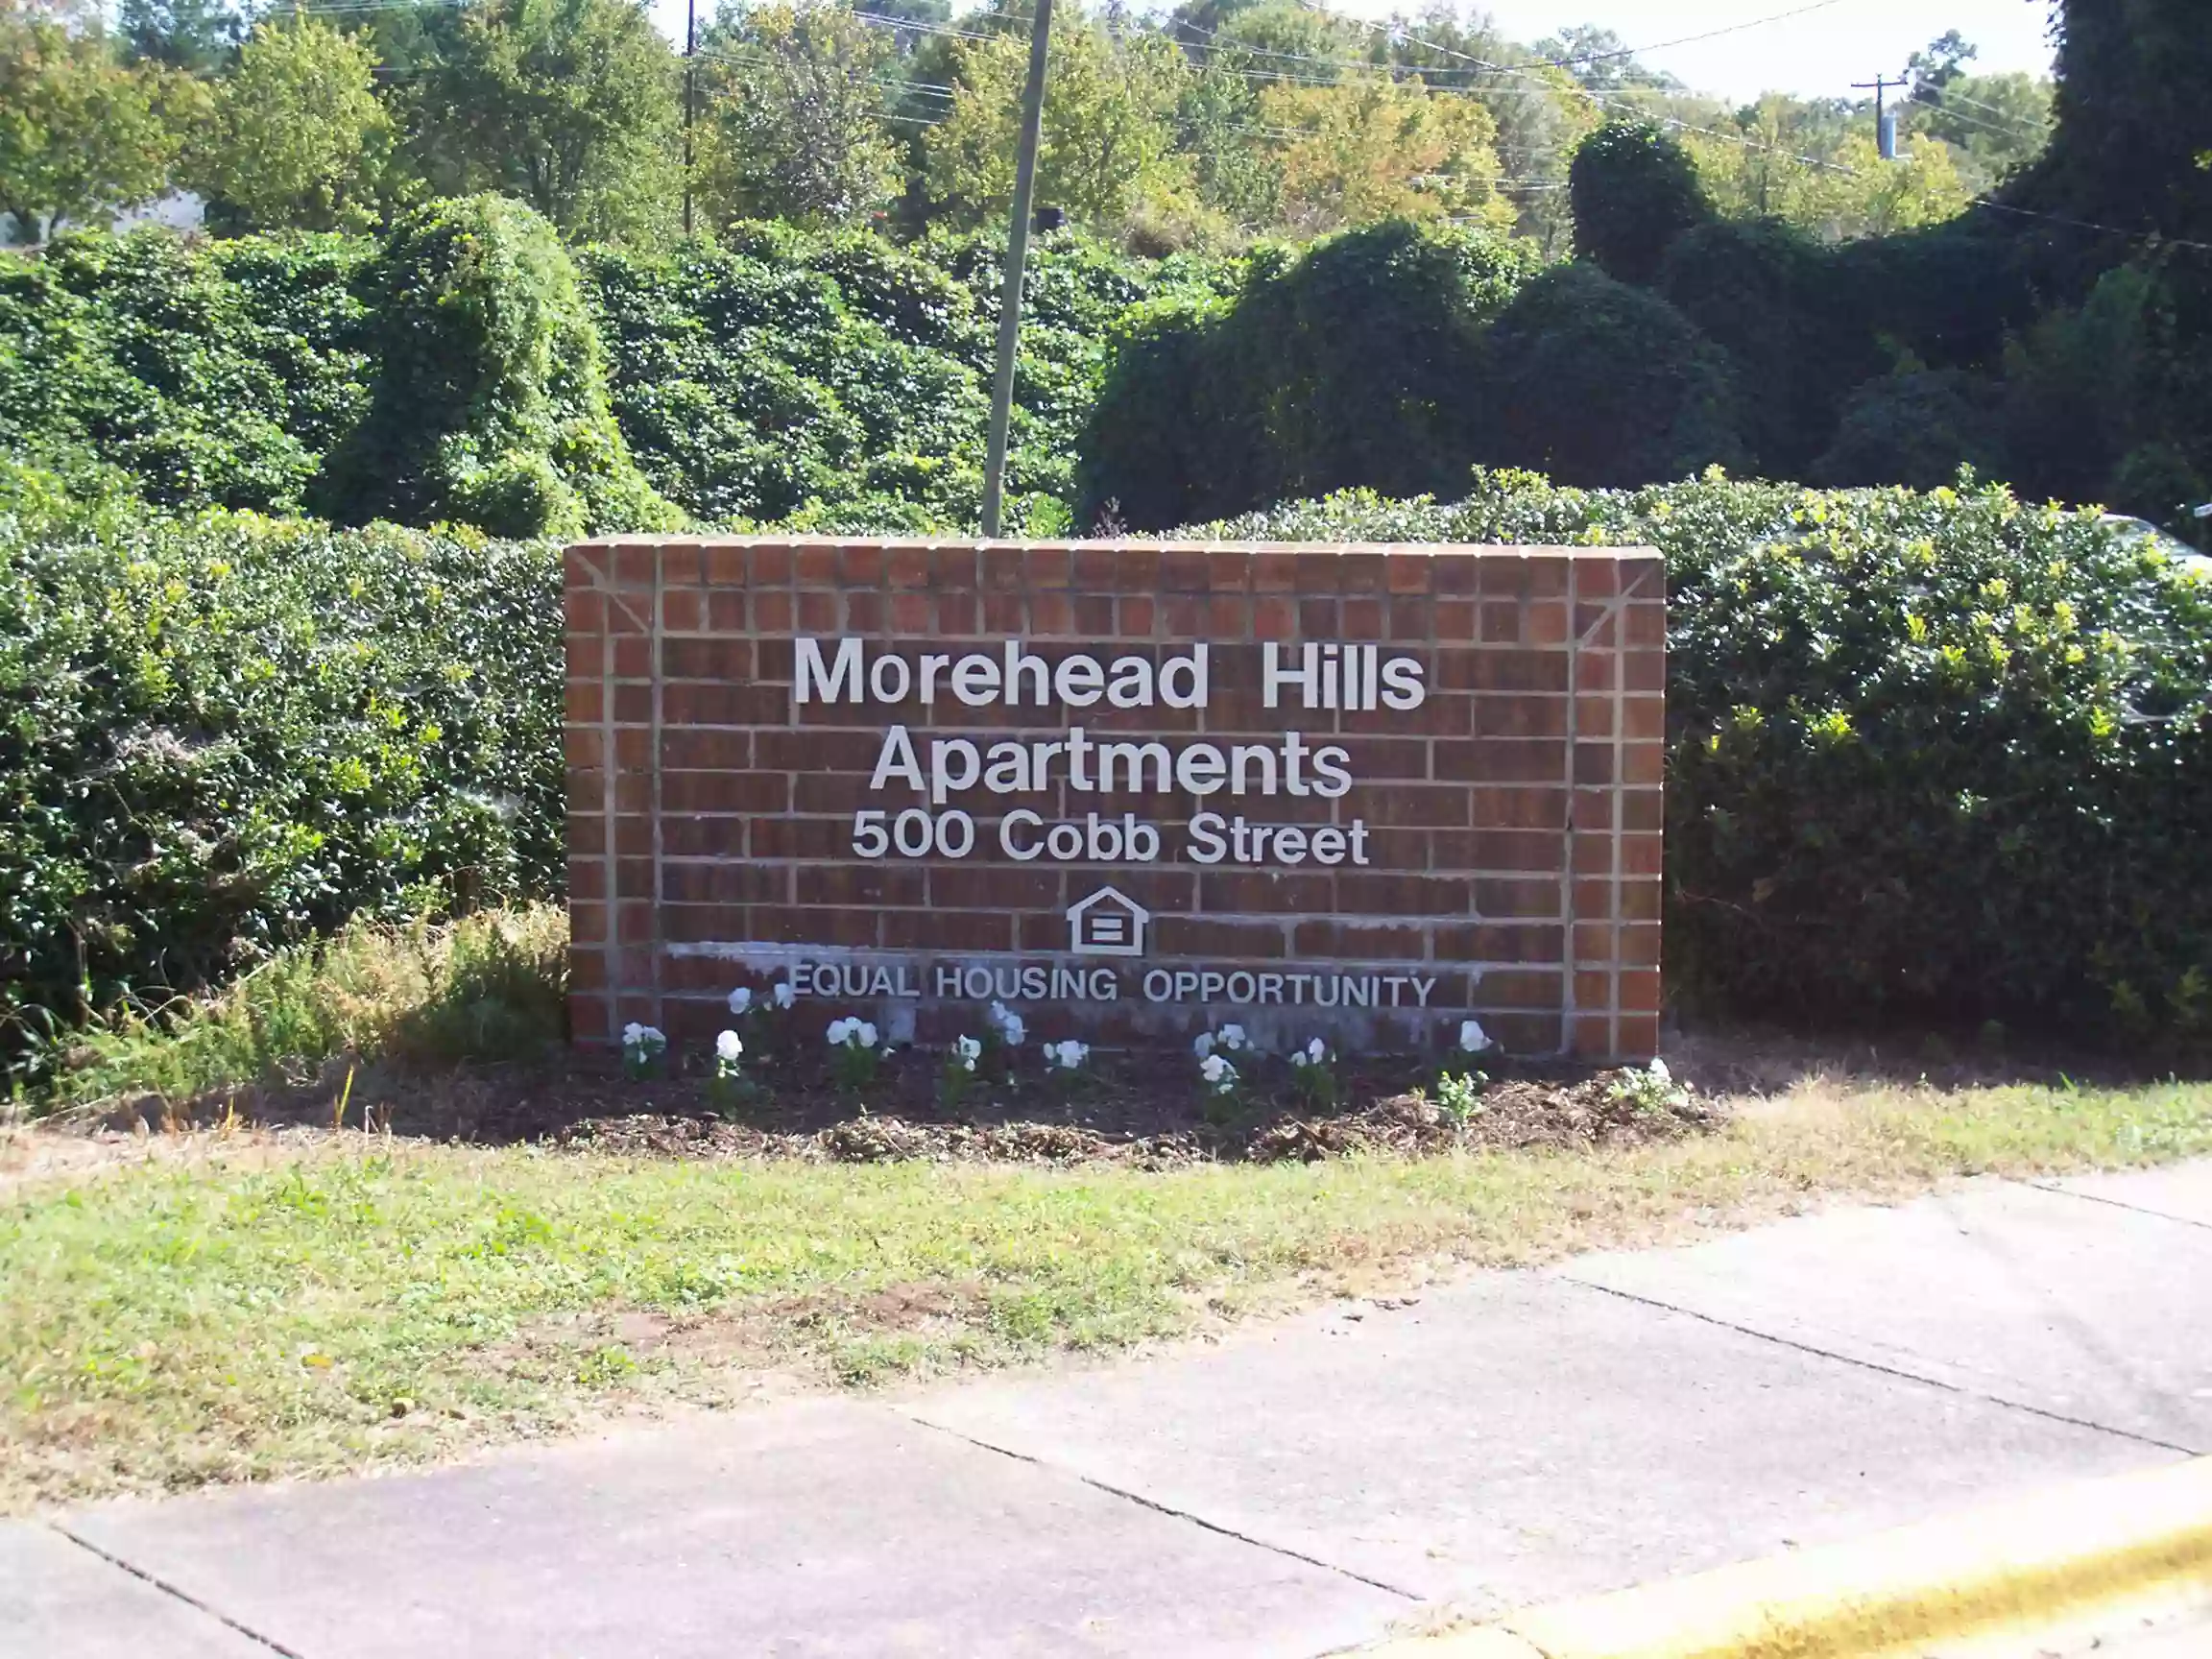 Morehead Hills